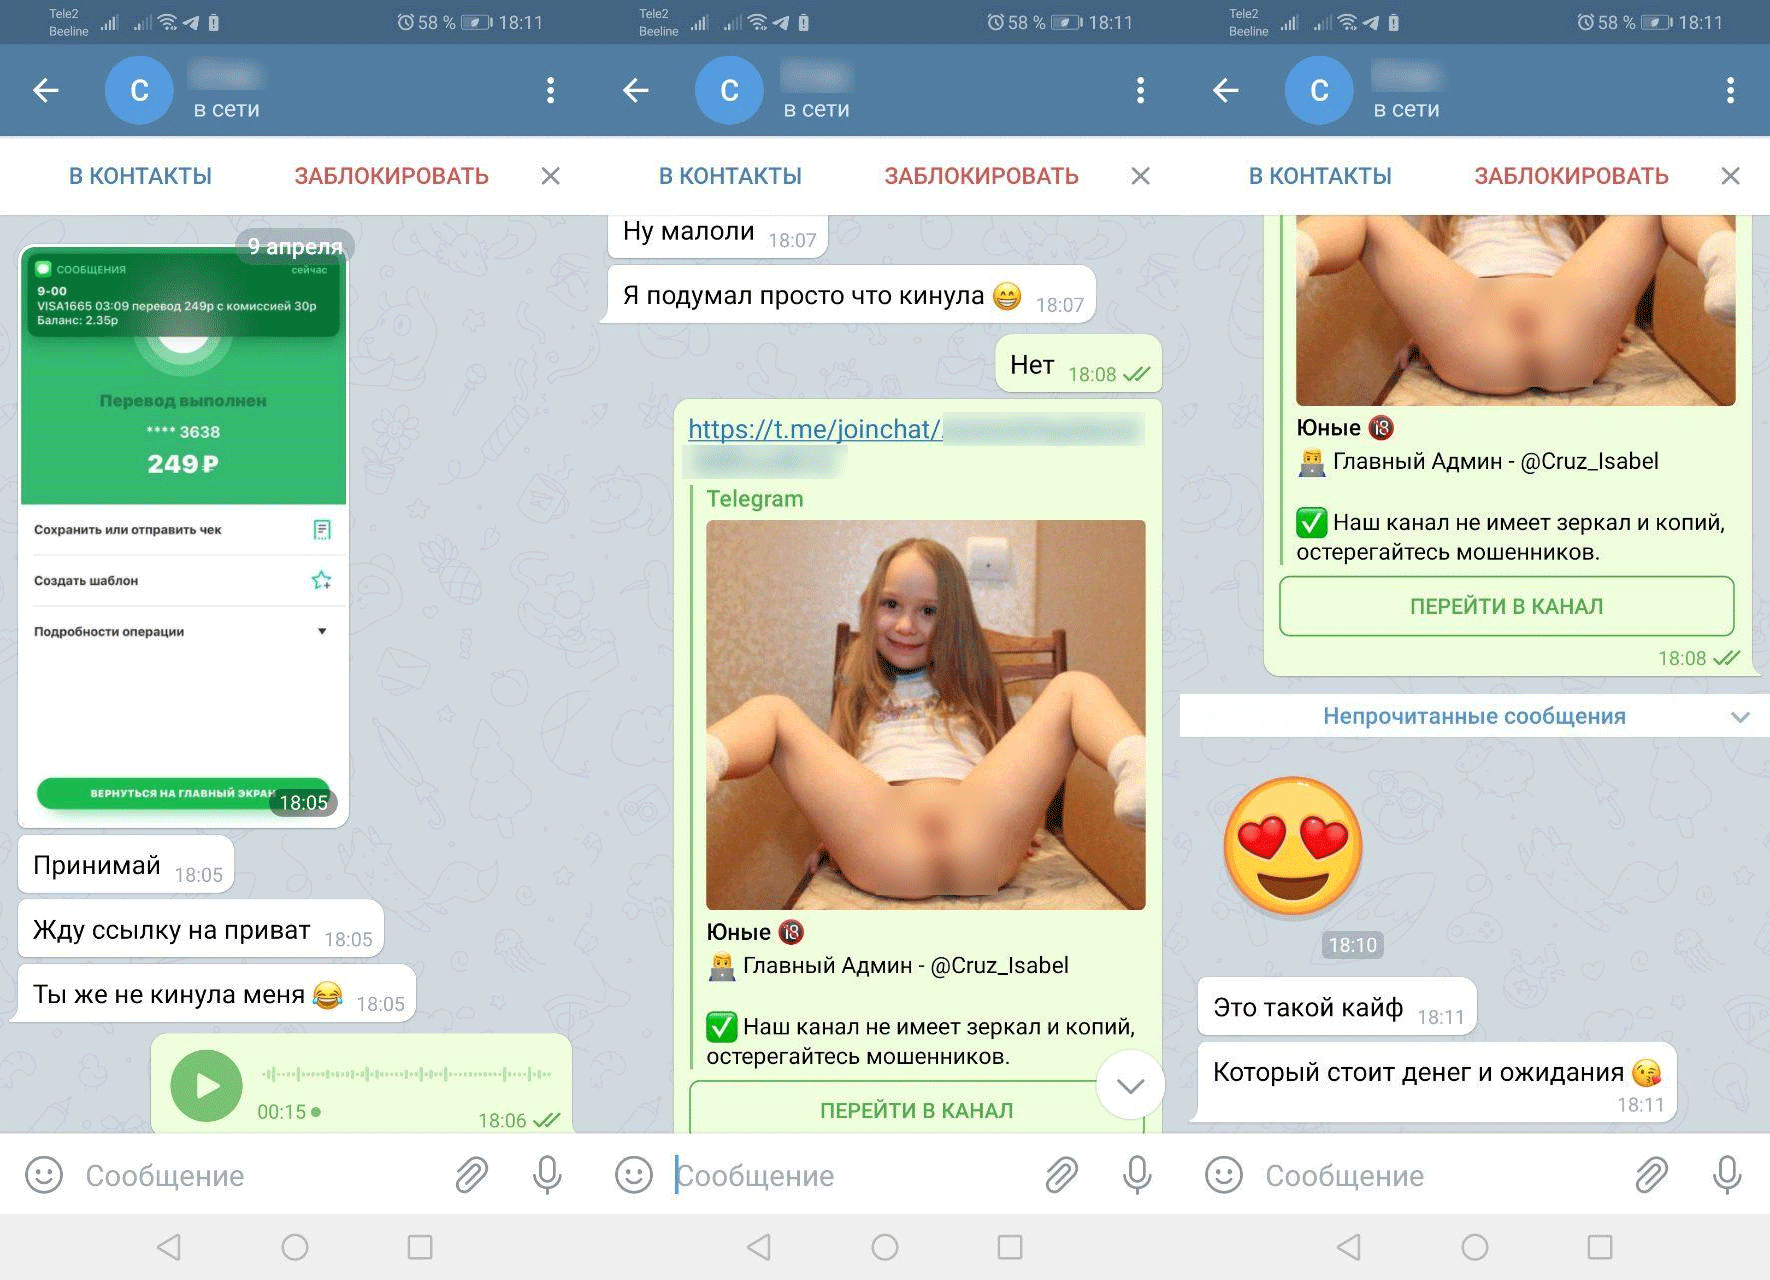 Pornography on telegram